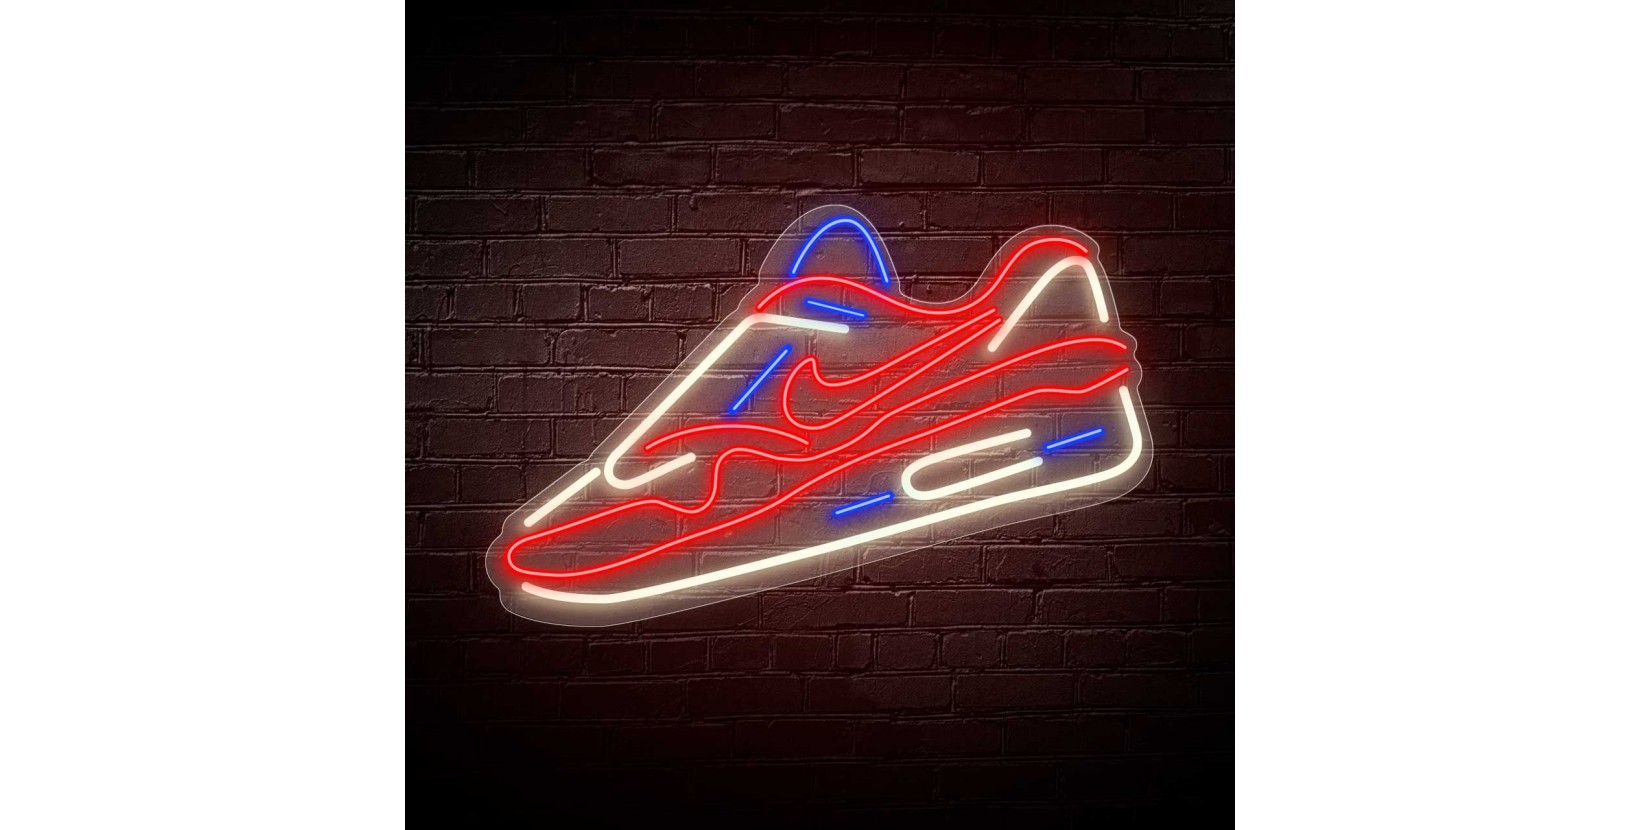 Neon Zapatilla Nike Neon zapato deporte GRATIS